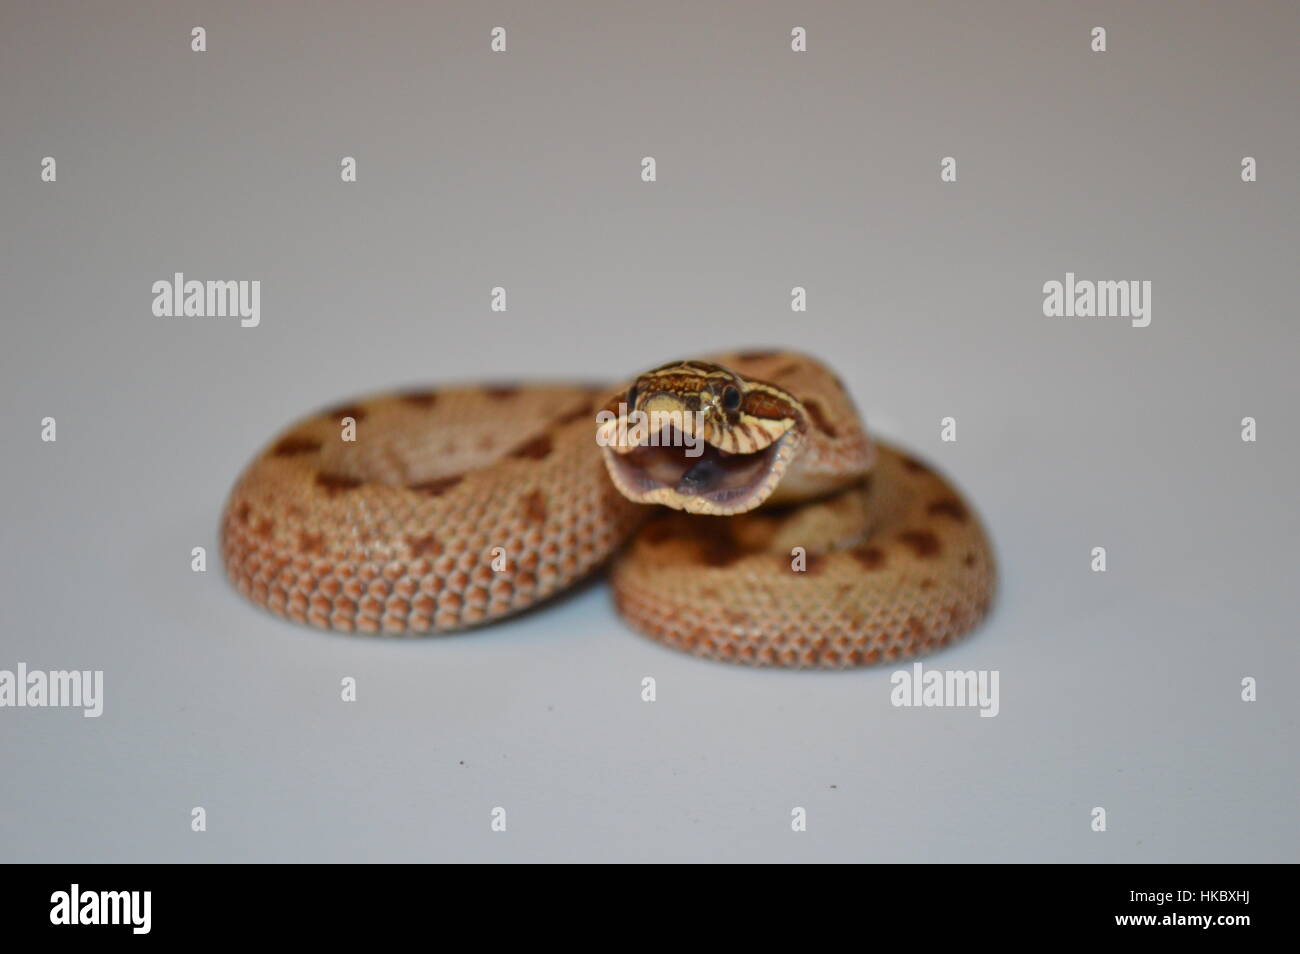 Albino Western Hognose Snake Stock Photo